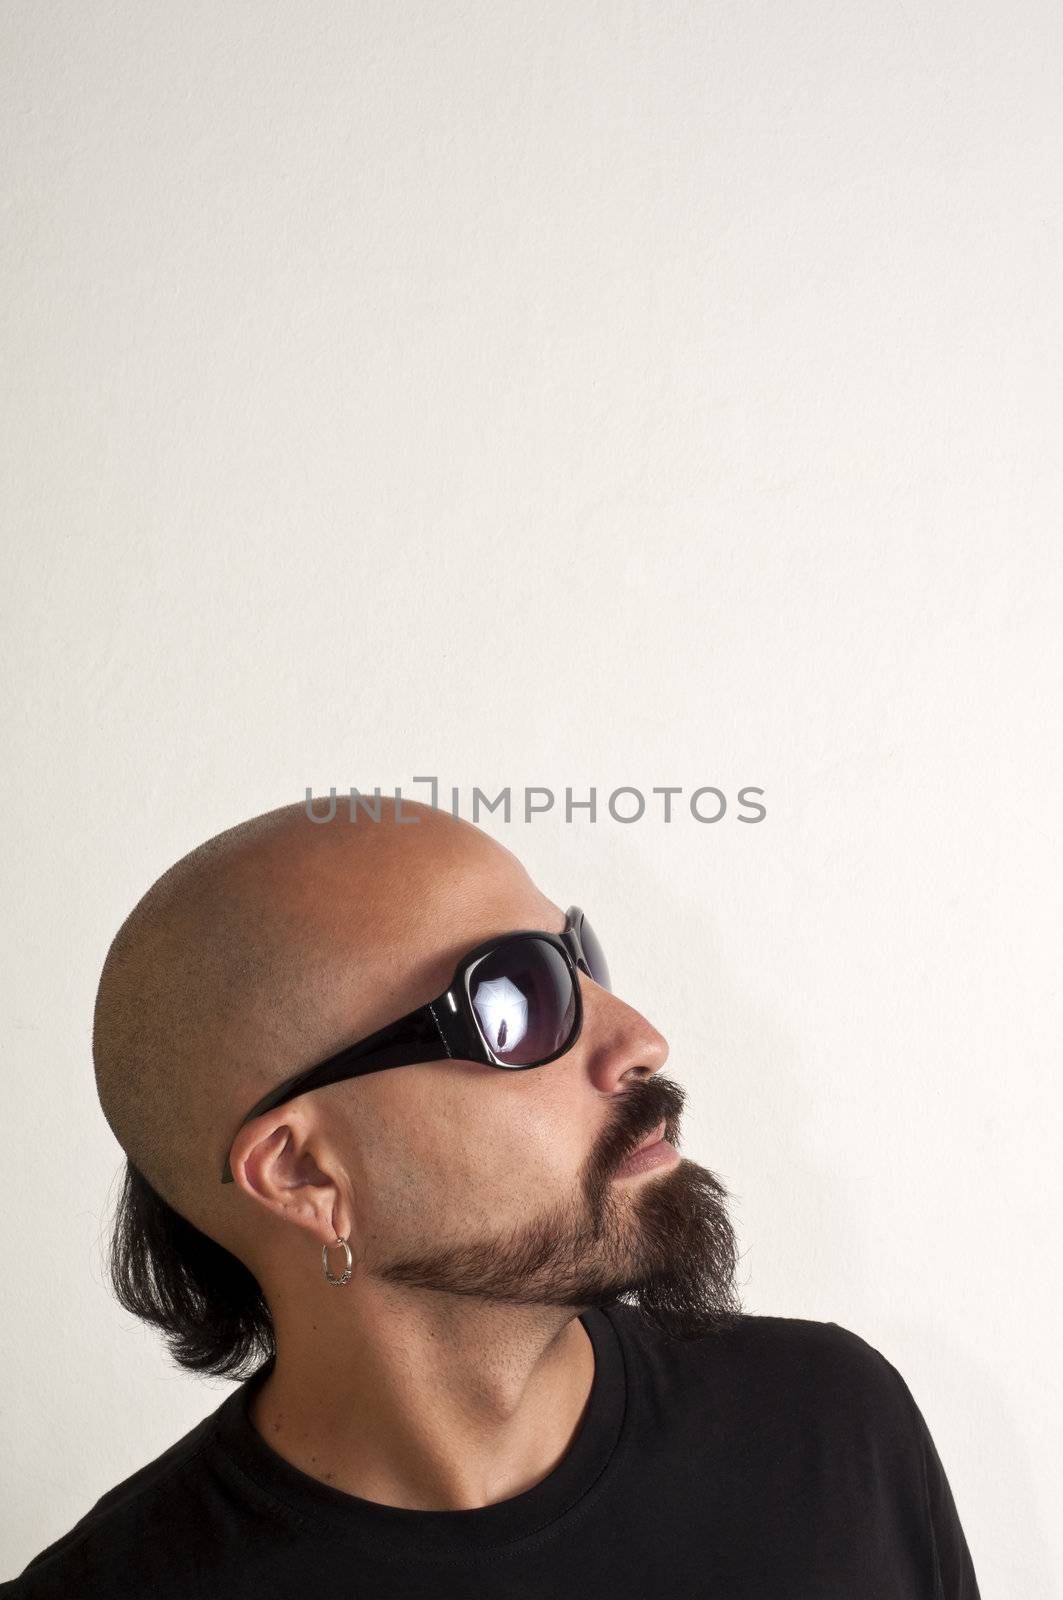 blacks man with glasses, beard and black jacket by peus